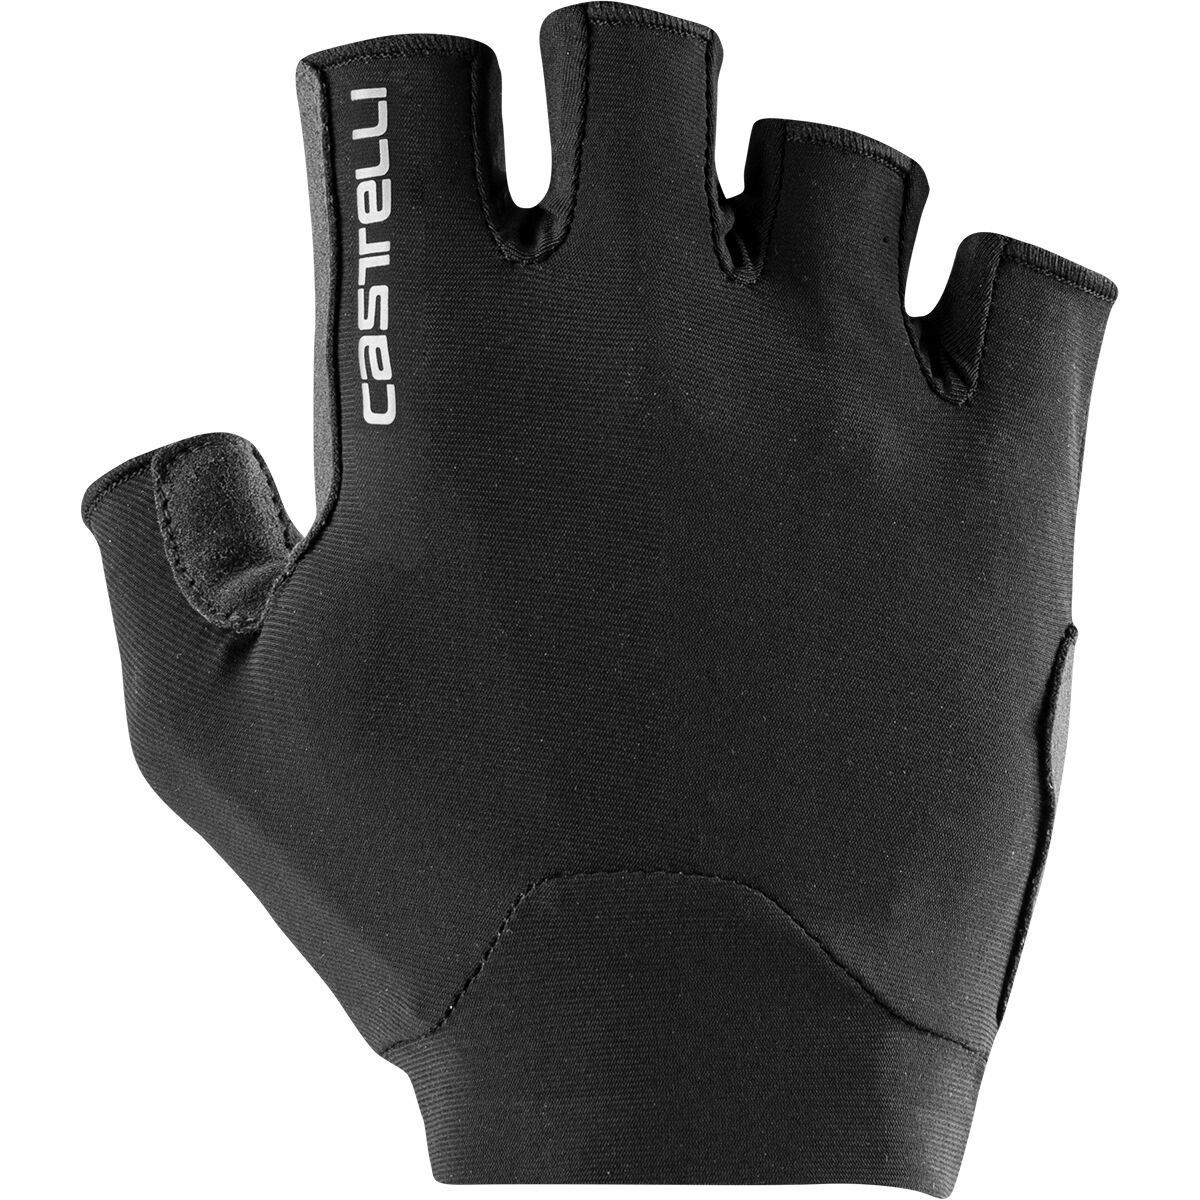 Castelli Endurance Glove - Men's